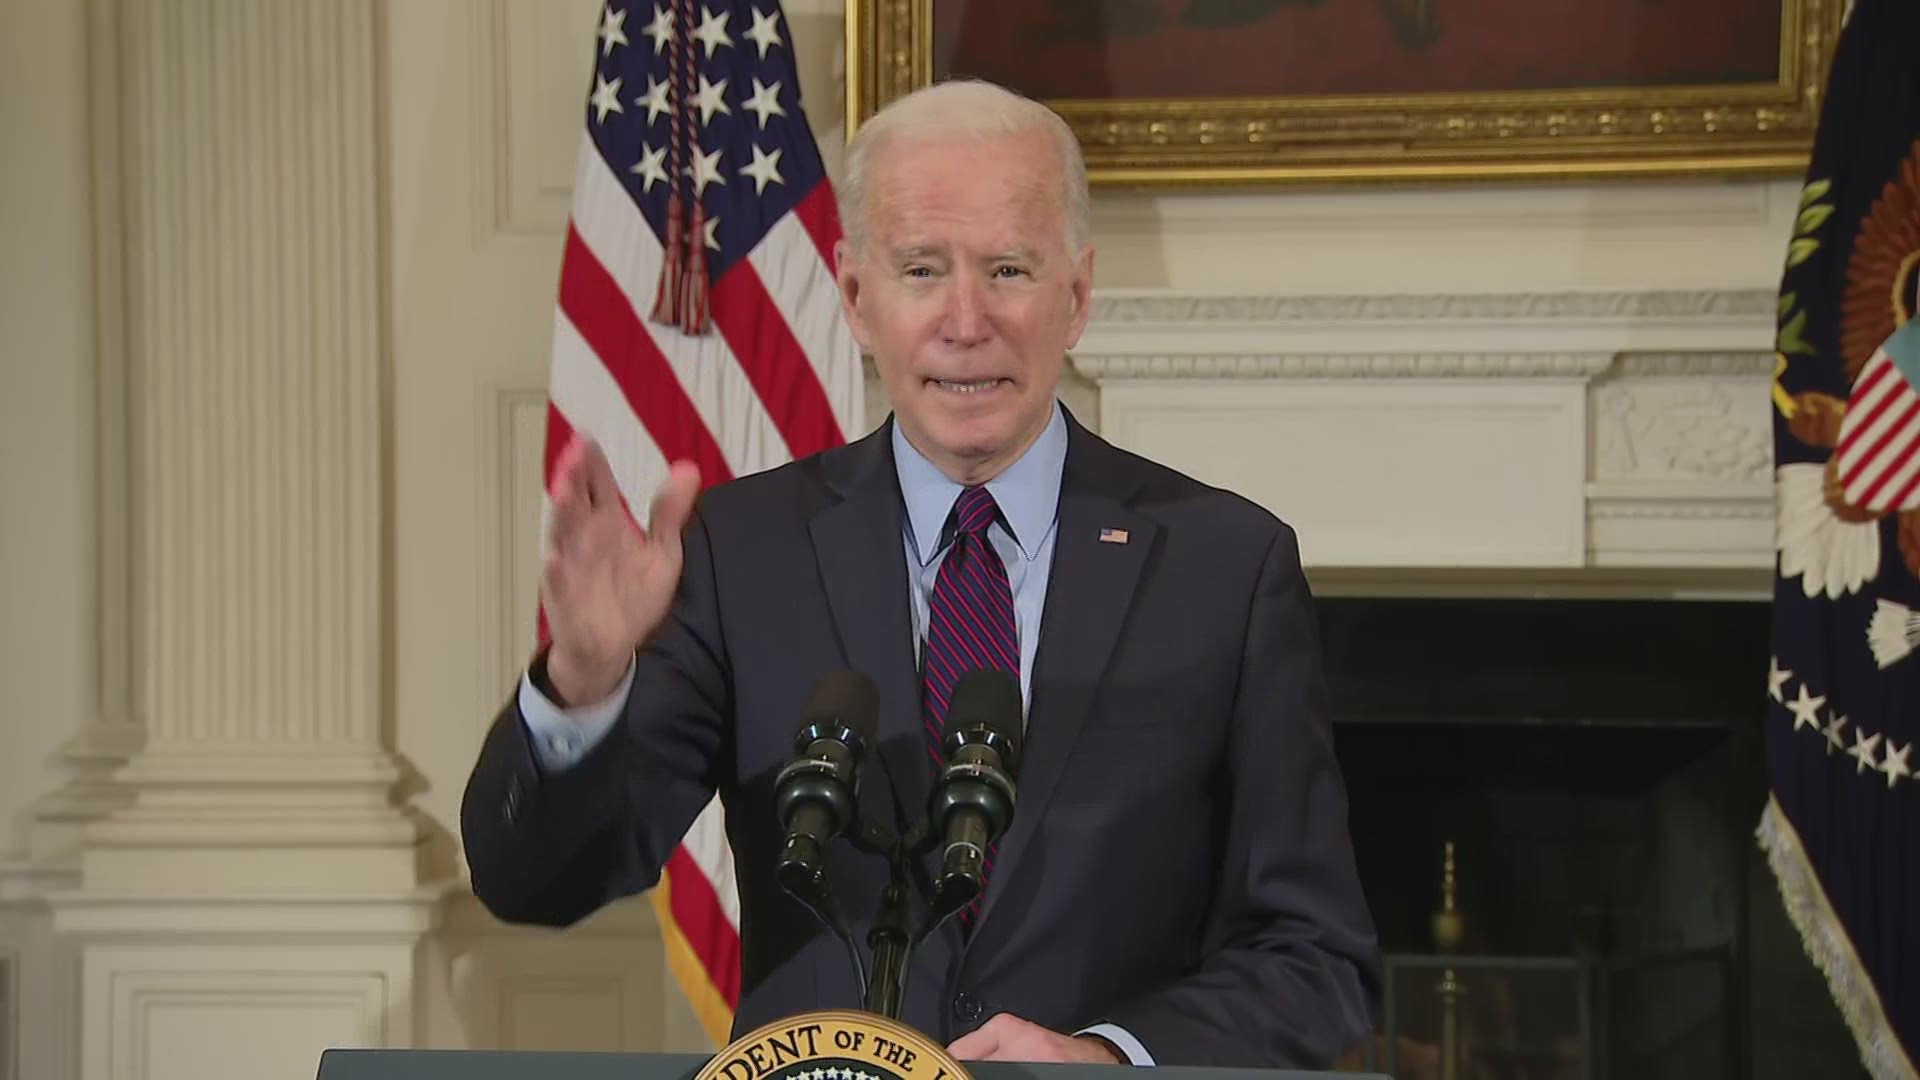 President Biden addresses more specifics in the proposed $1.9 trillion coronavirus relief aid.